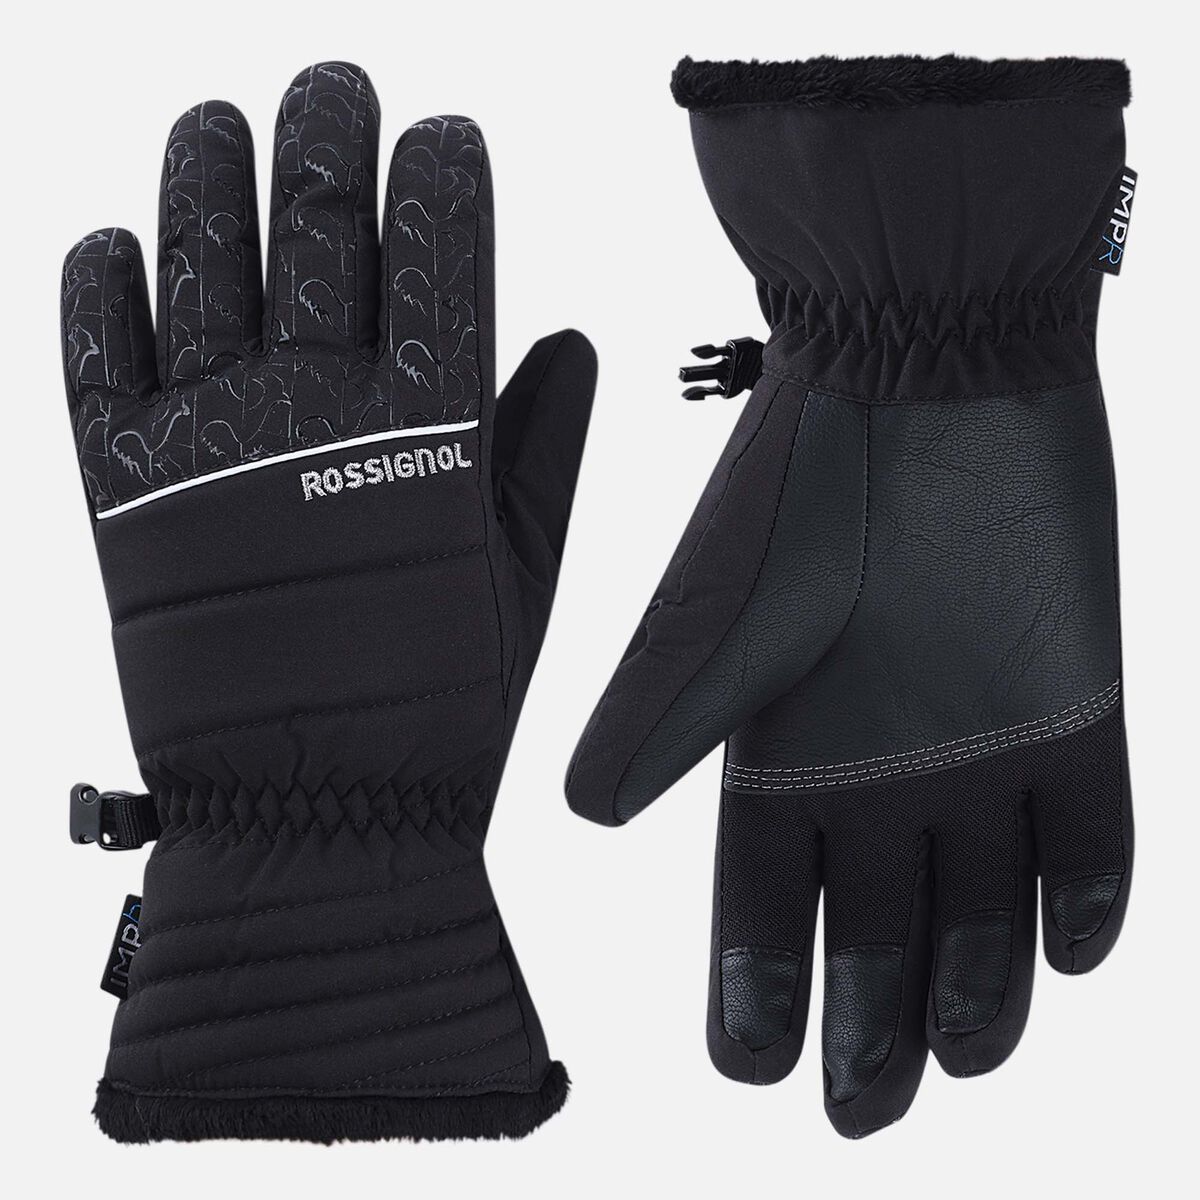 Rossignol Women's Temptation waterproof ski gloves Black